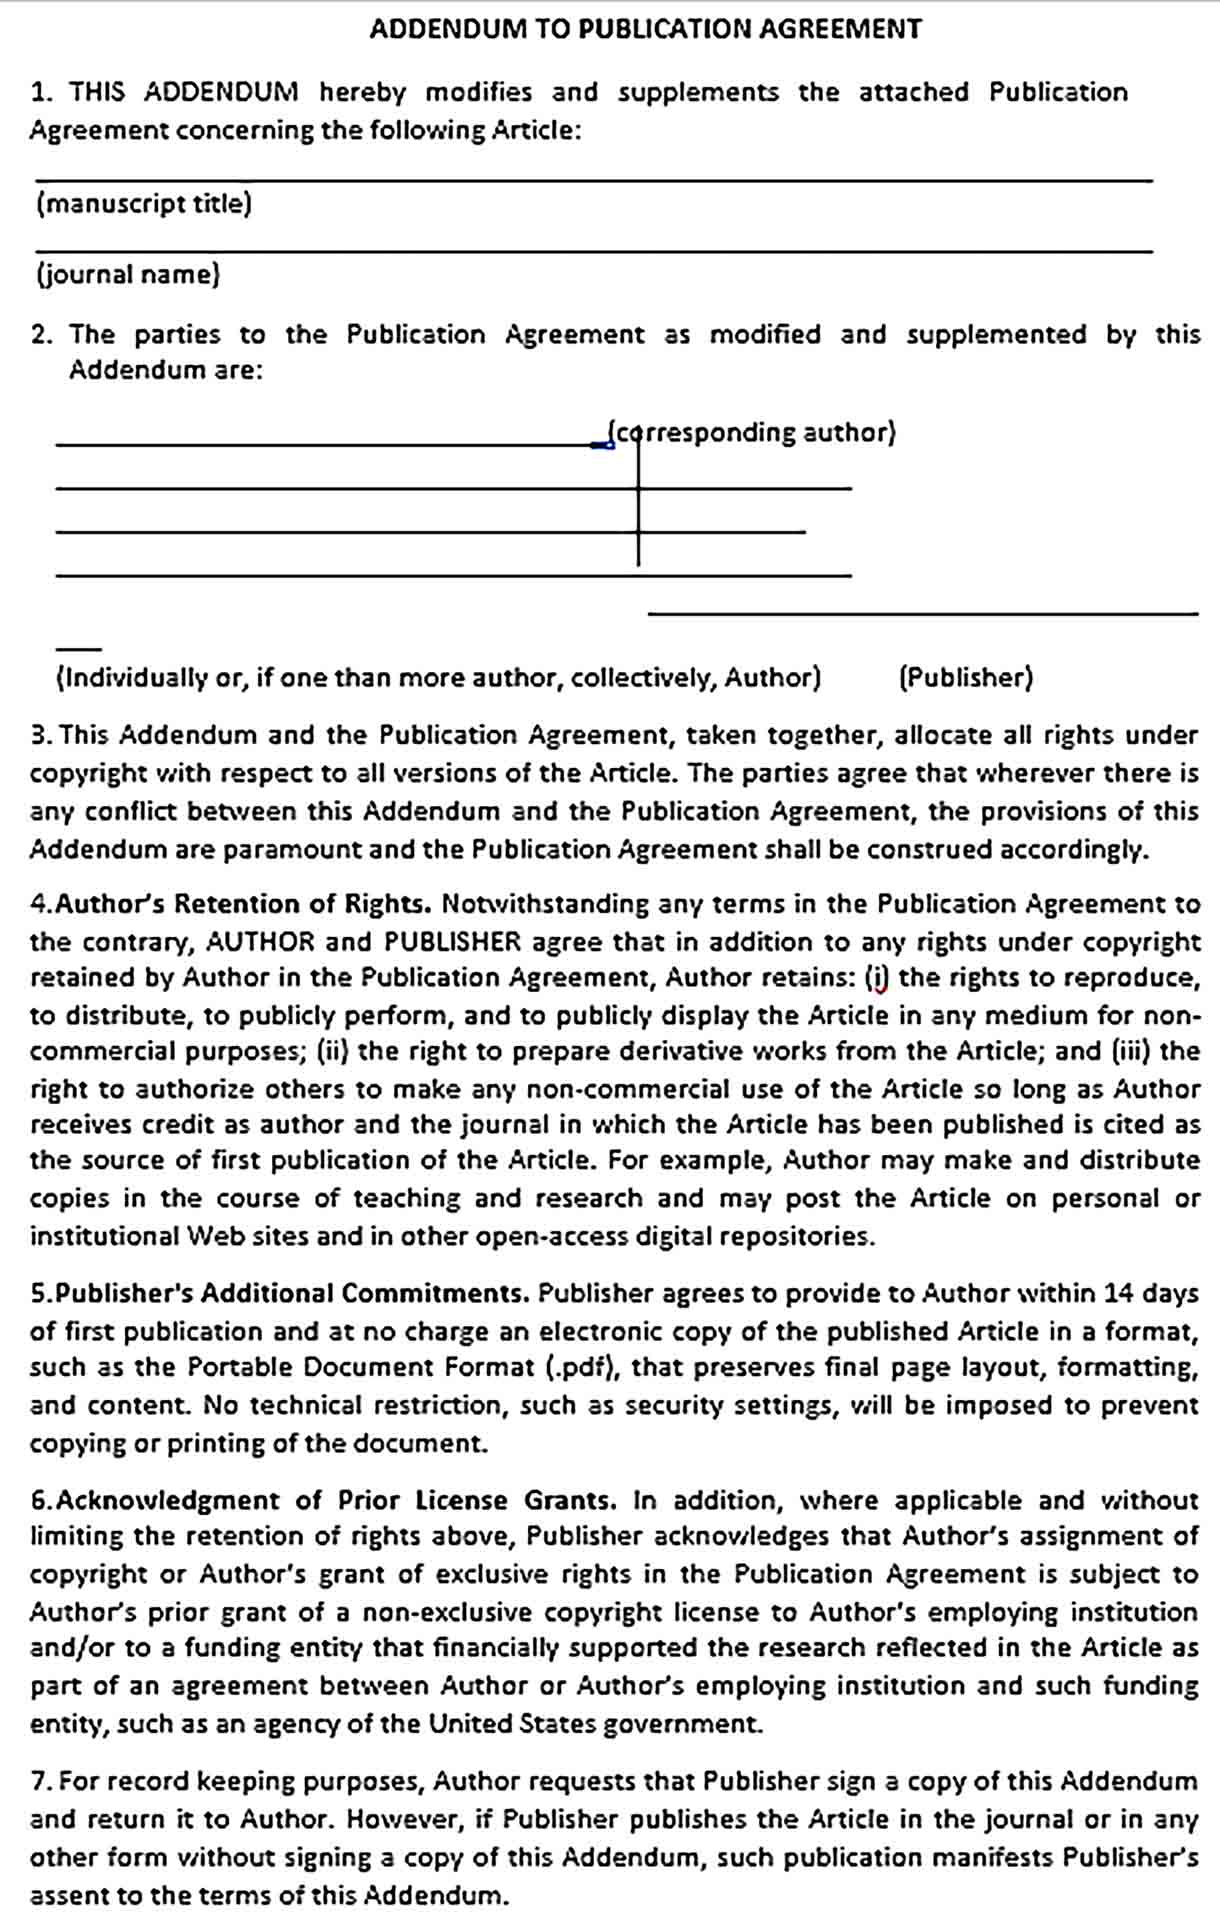 Sample Addendum to Publication Agreement